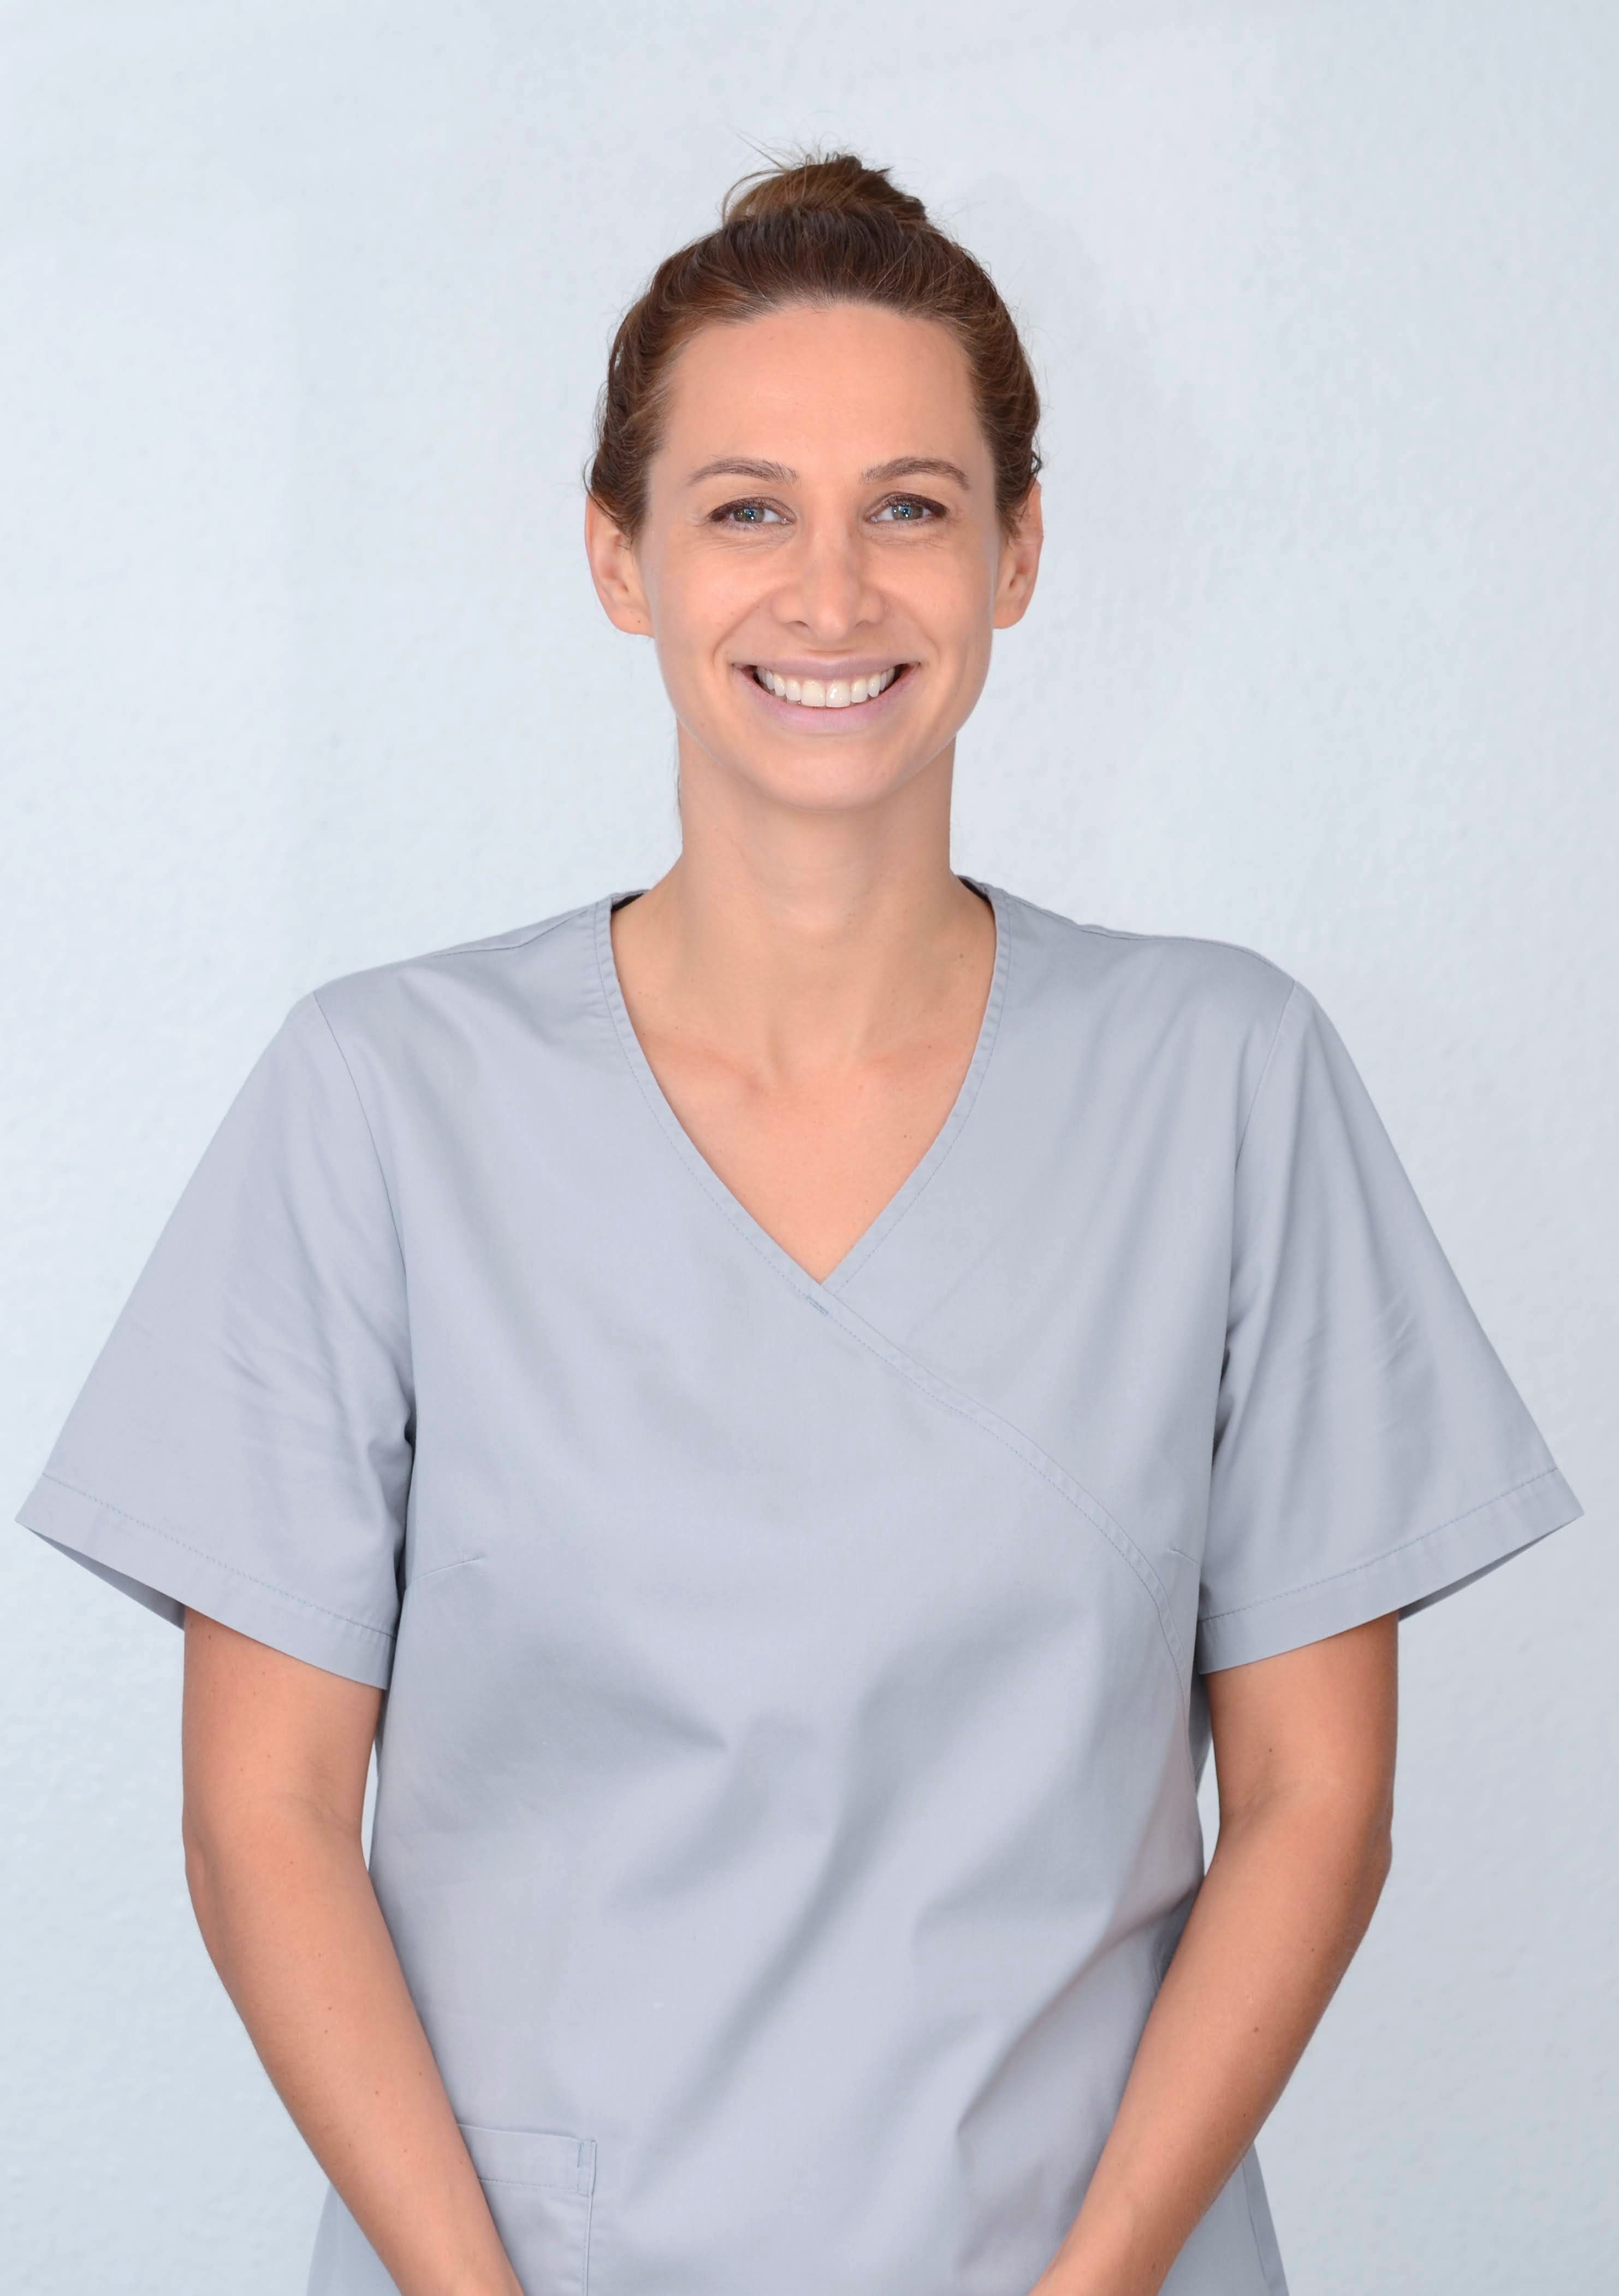 Dr. Anna Silvester